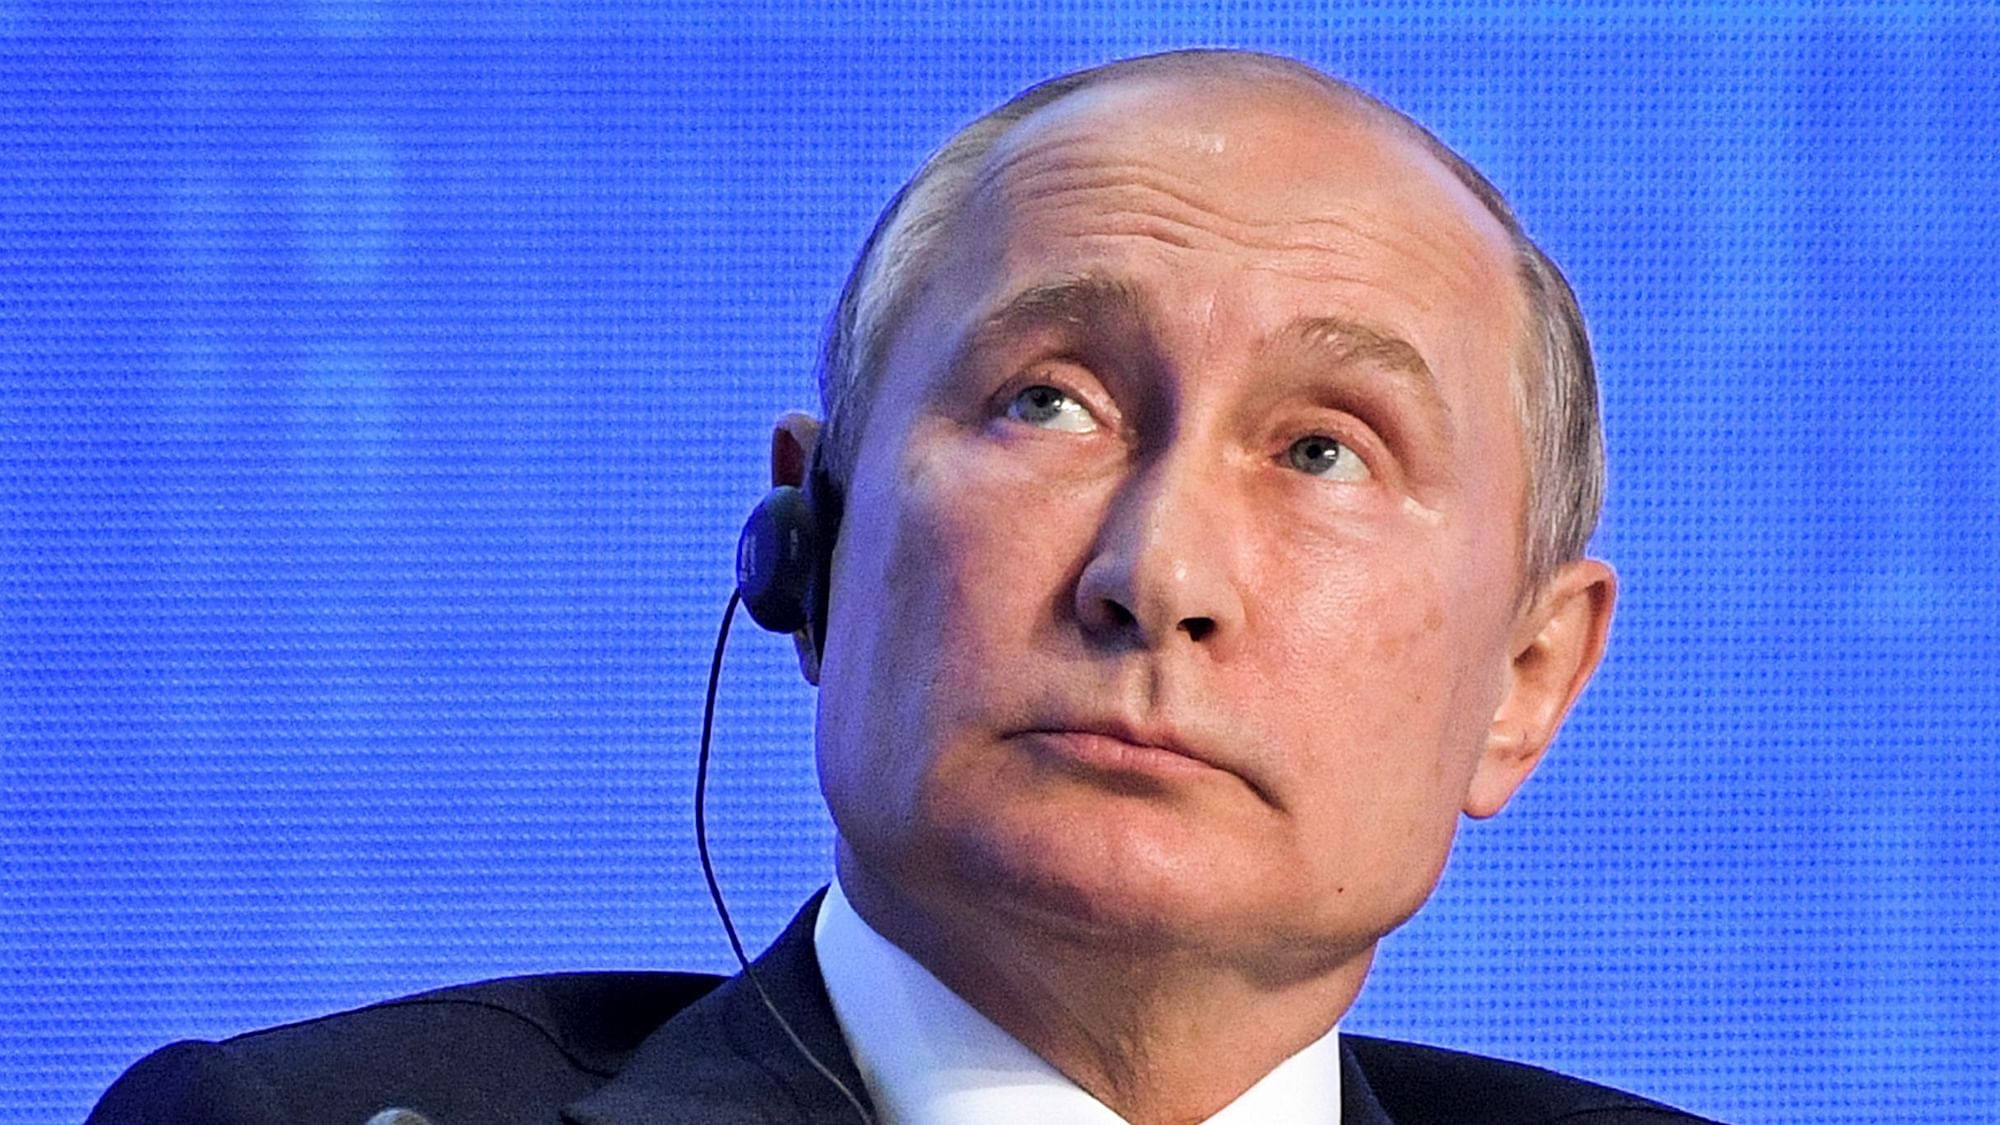 File image if Russian President Vladimir Putin.